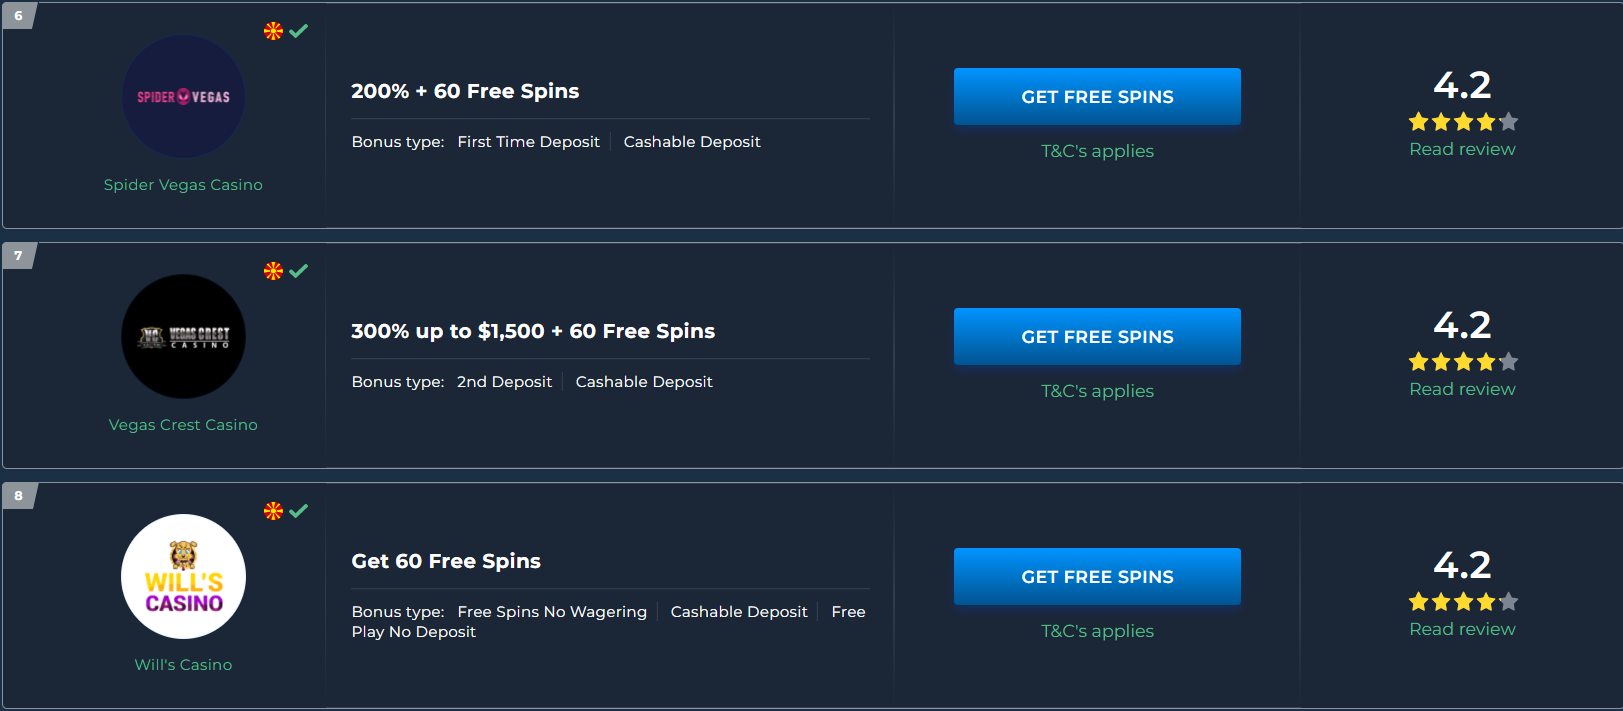 How to Claim 60 Free Spins Bonus